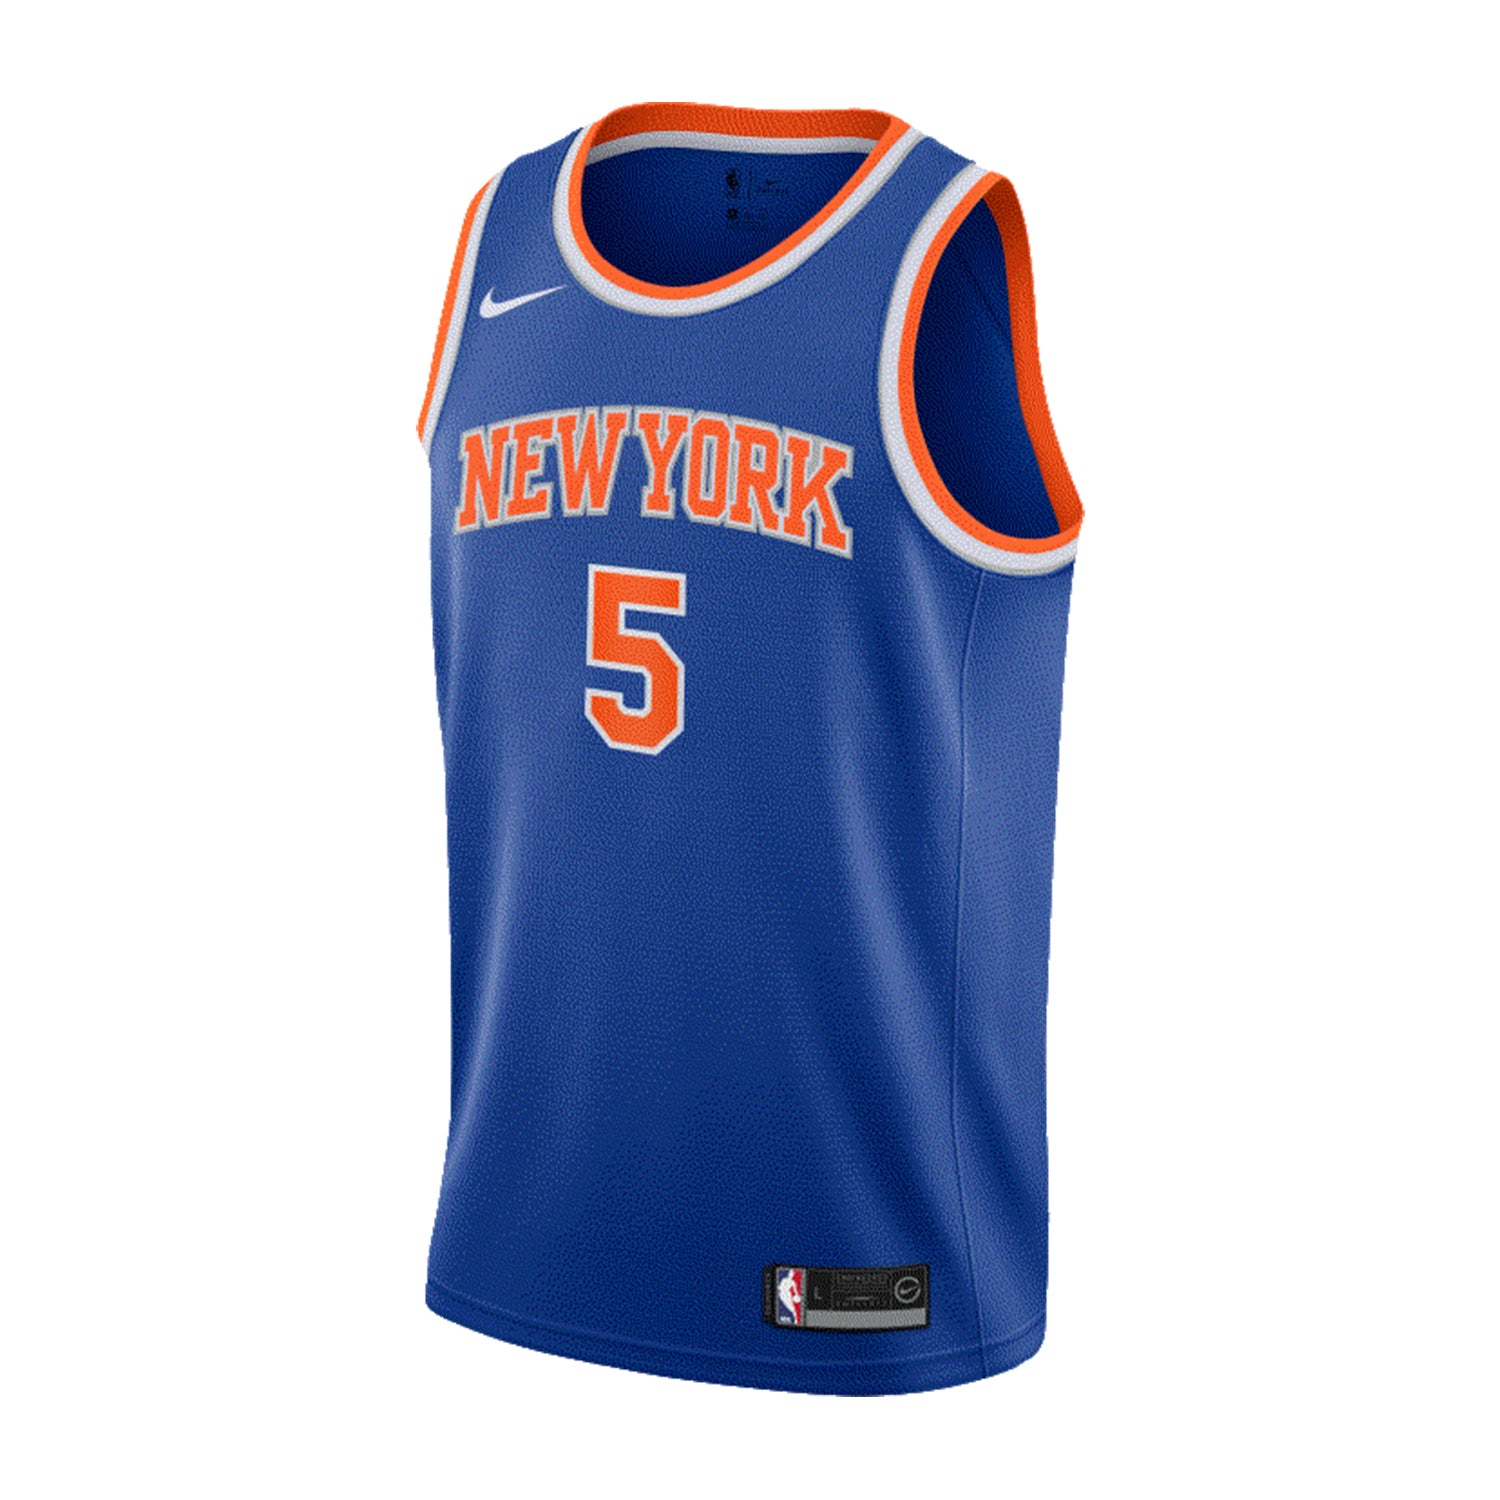 Immanuel Quickley - New York Knicks - Game-Worn Icon Edition